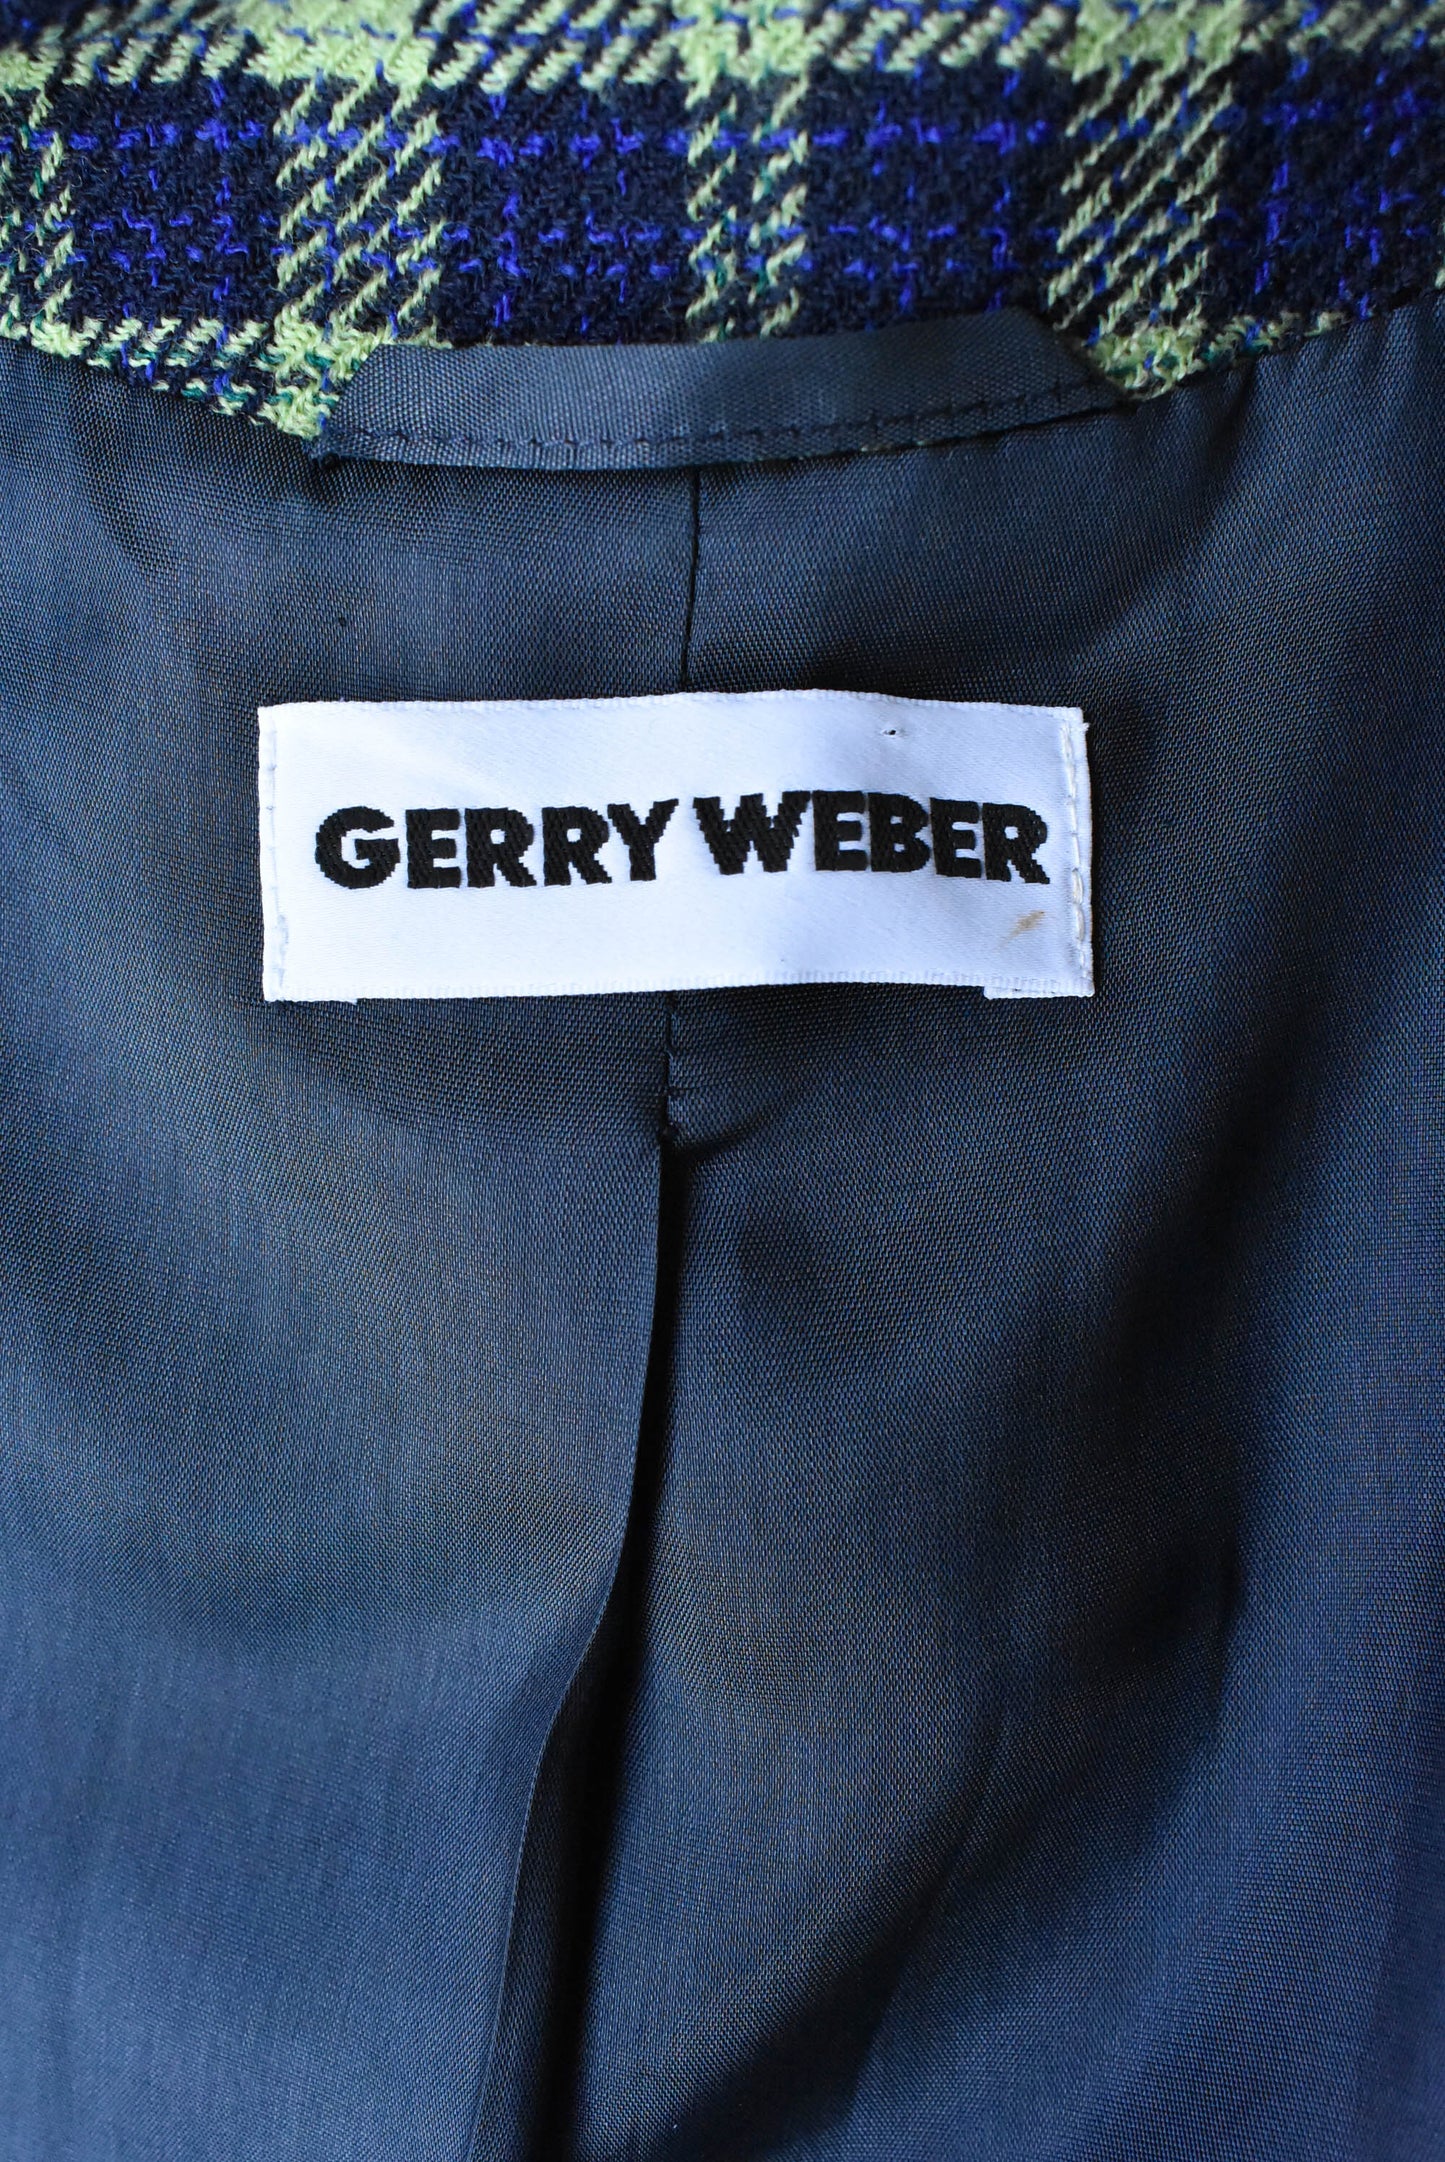 Gerry Weber plaid blazer, size 36